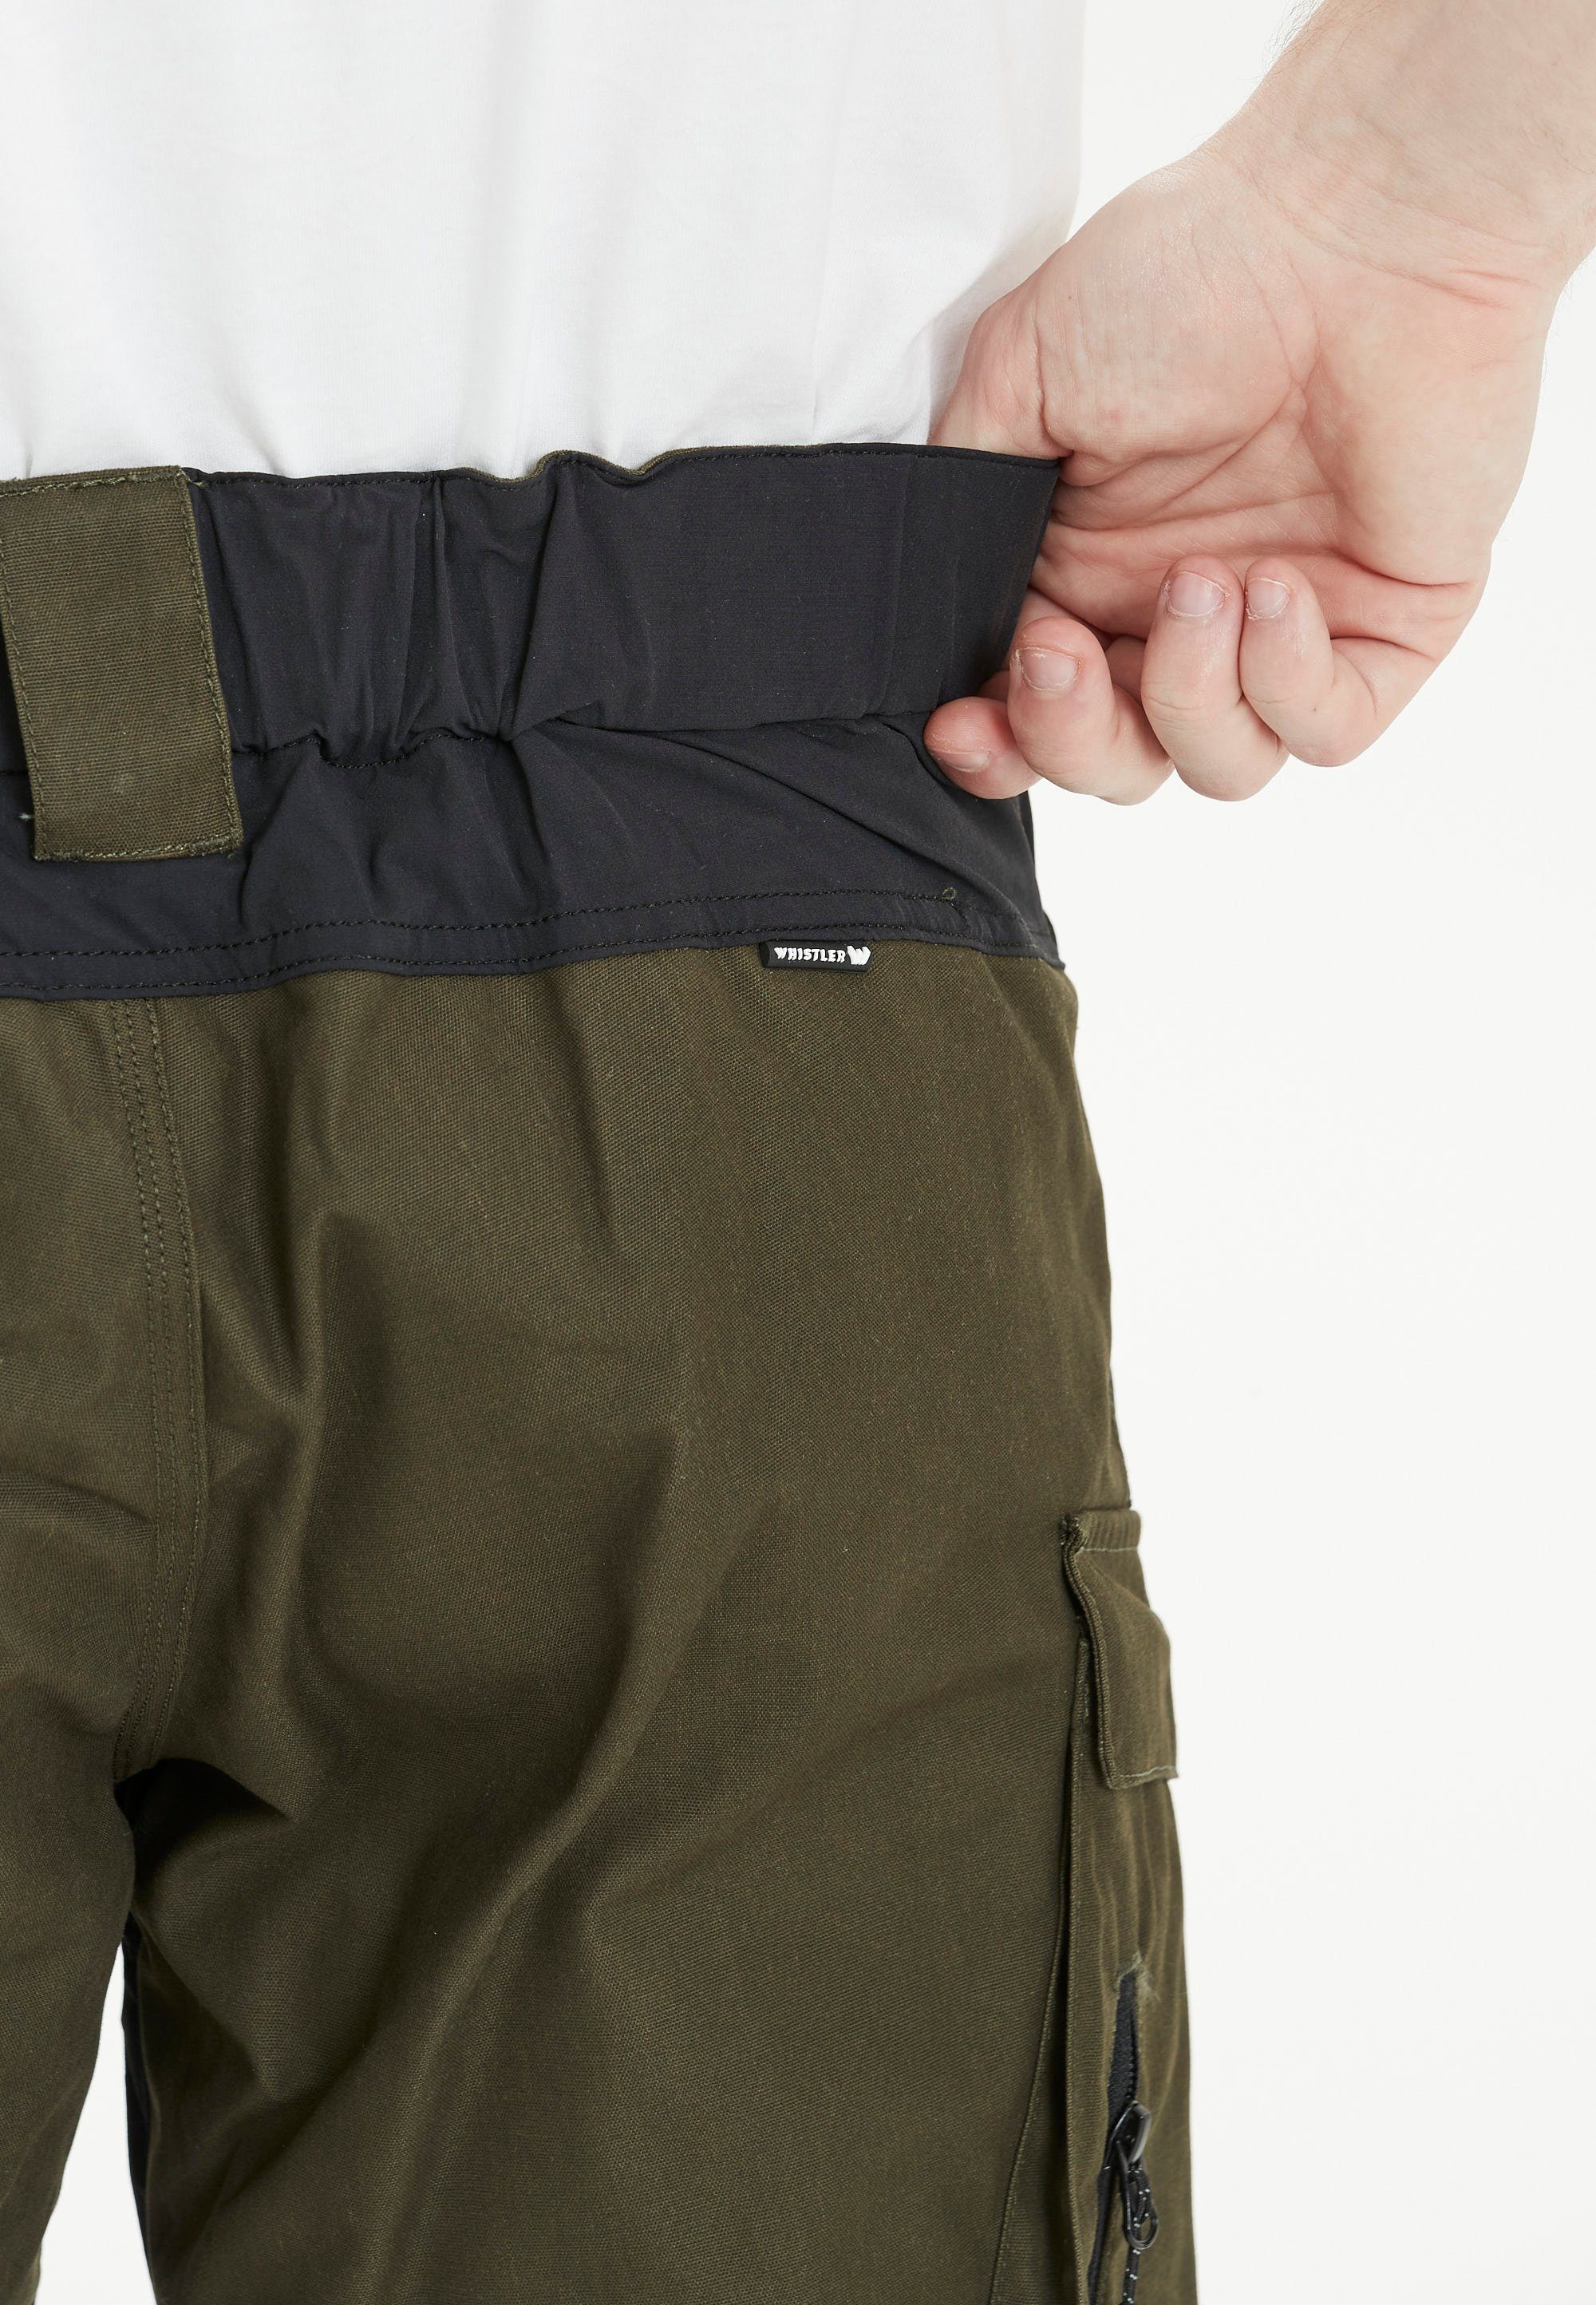 atmungsaktivem dunkelgrün-schwarz WHISTLER ROMMY Materialmix mit Shorts